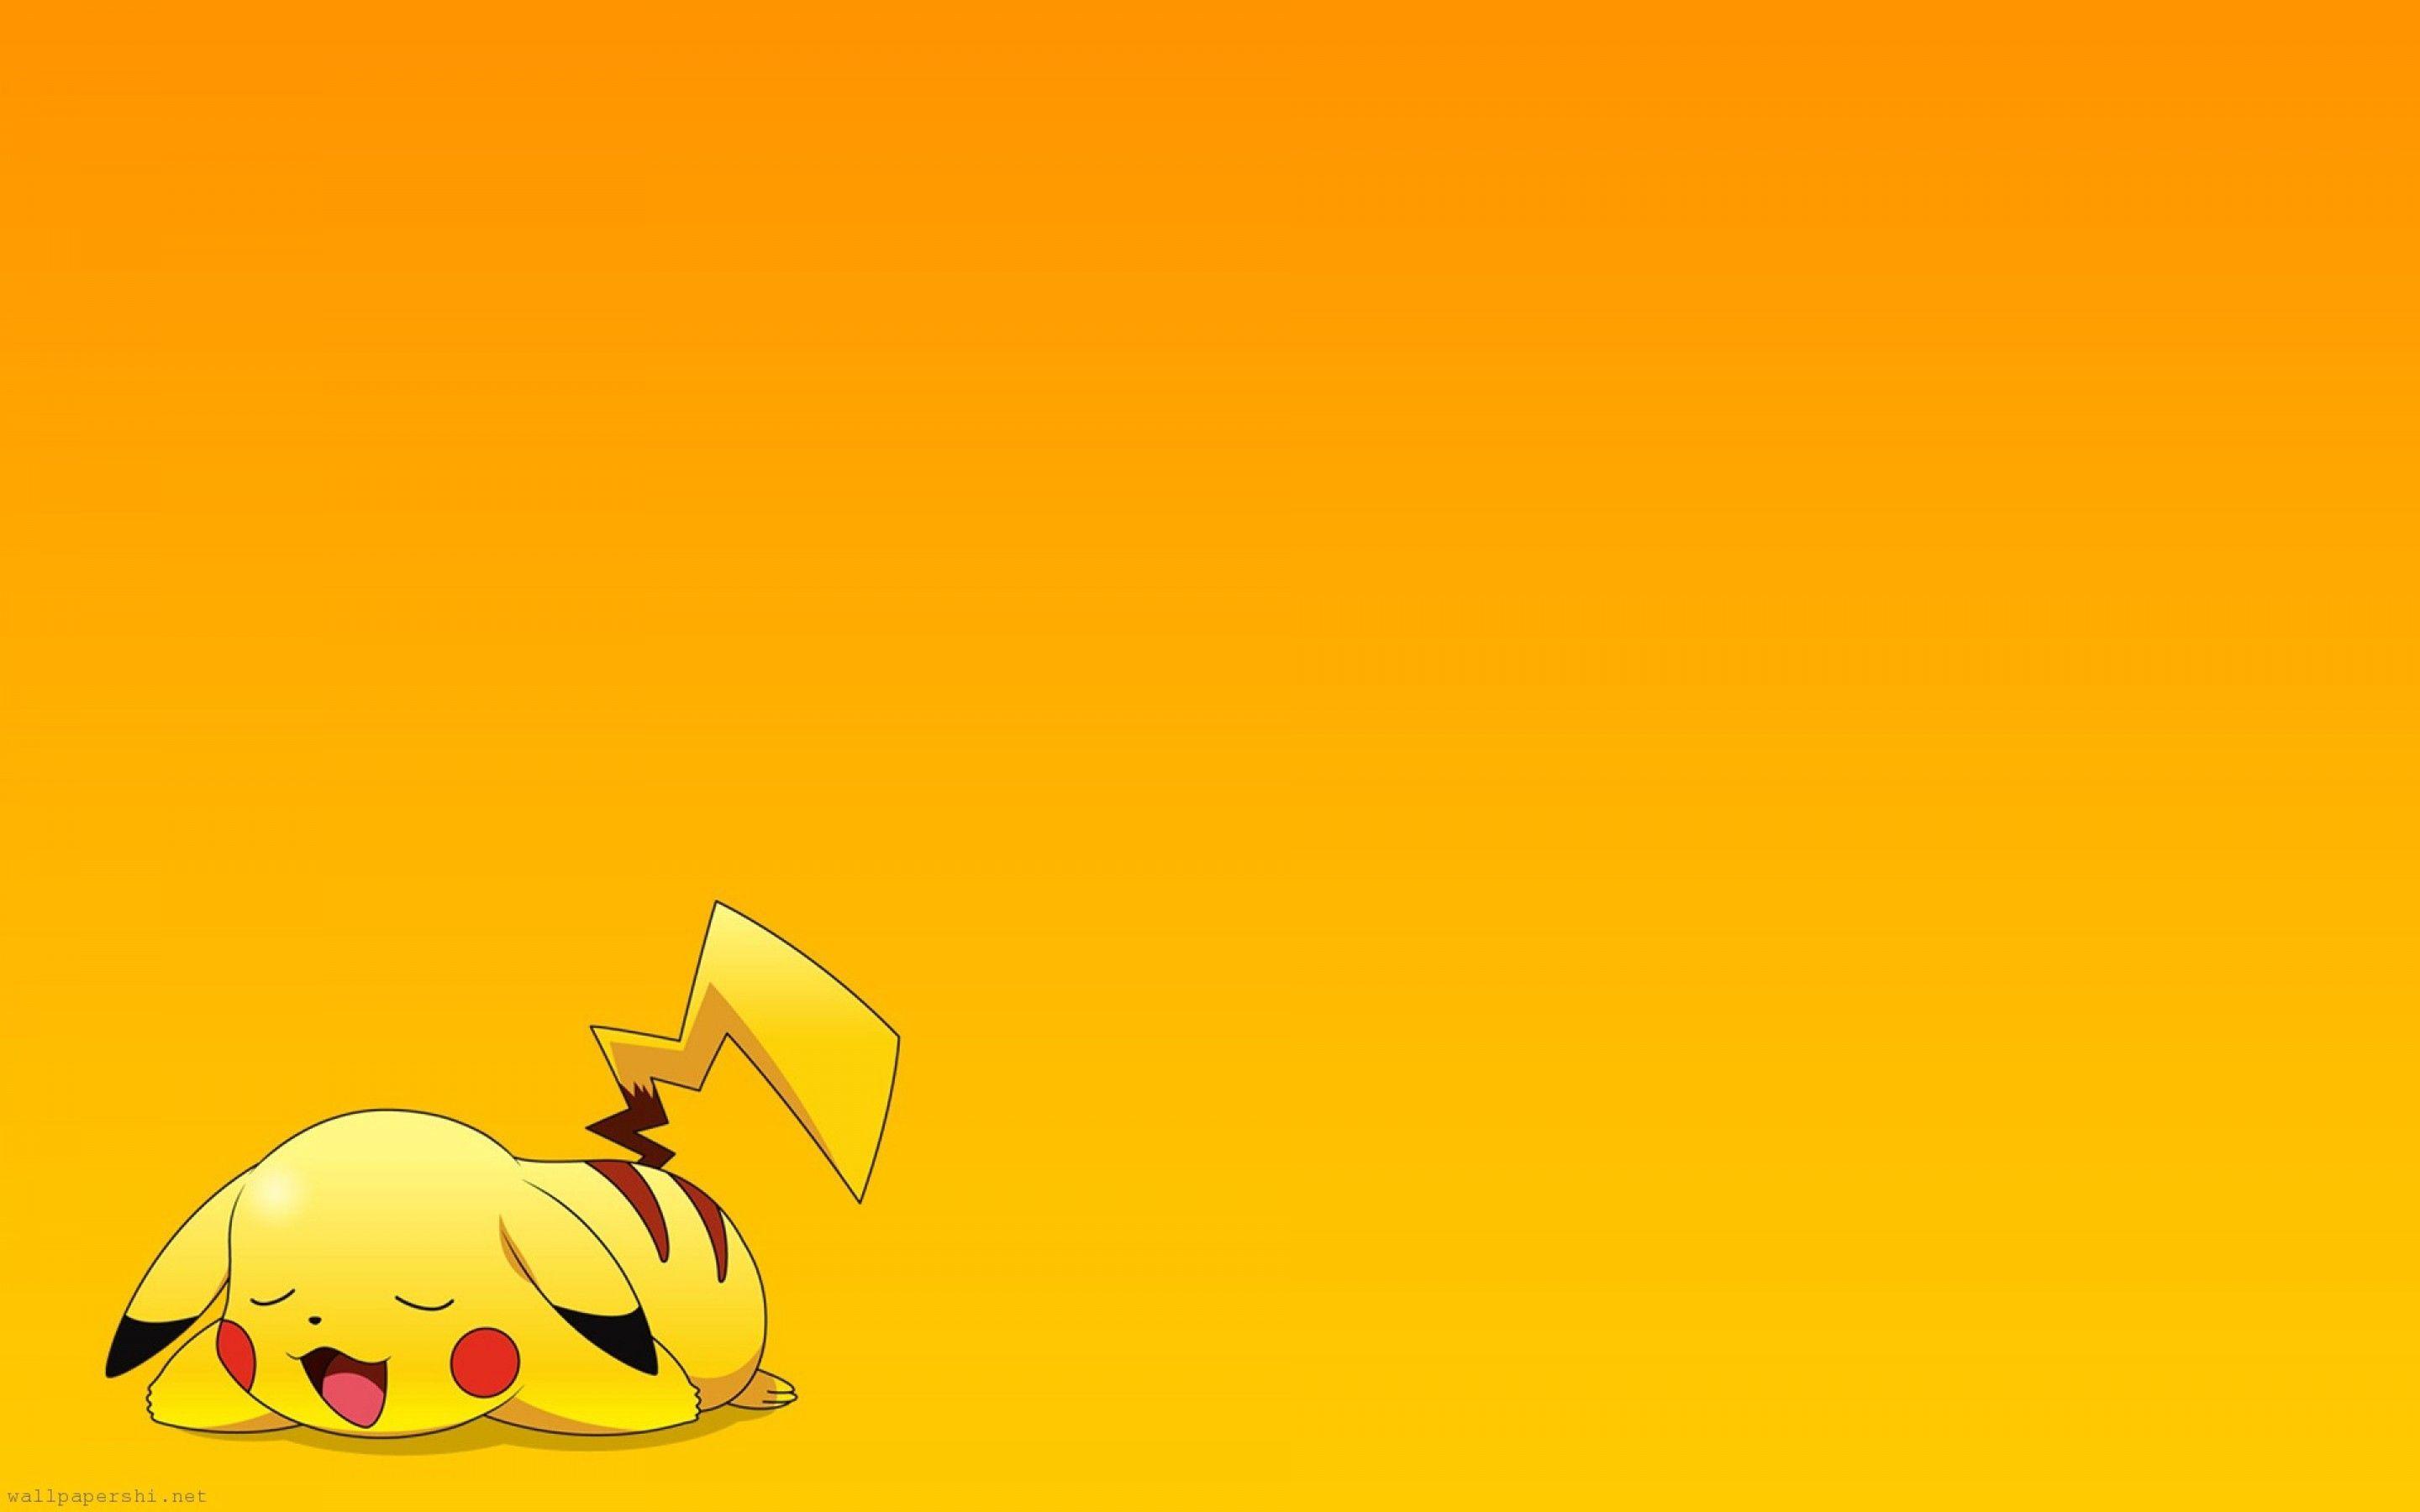 Pokémon Pikachu Wallpapers - Wallpaper Cave